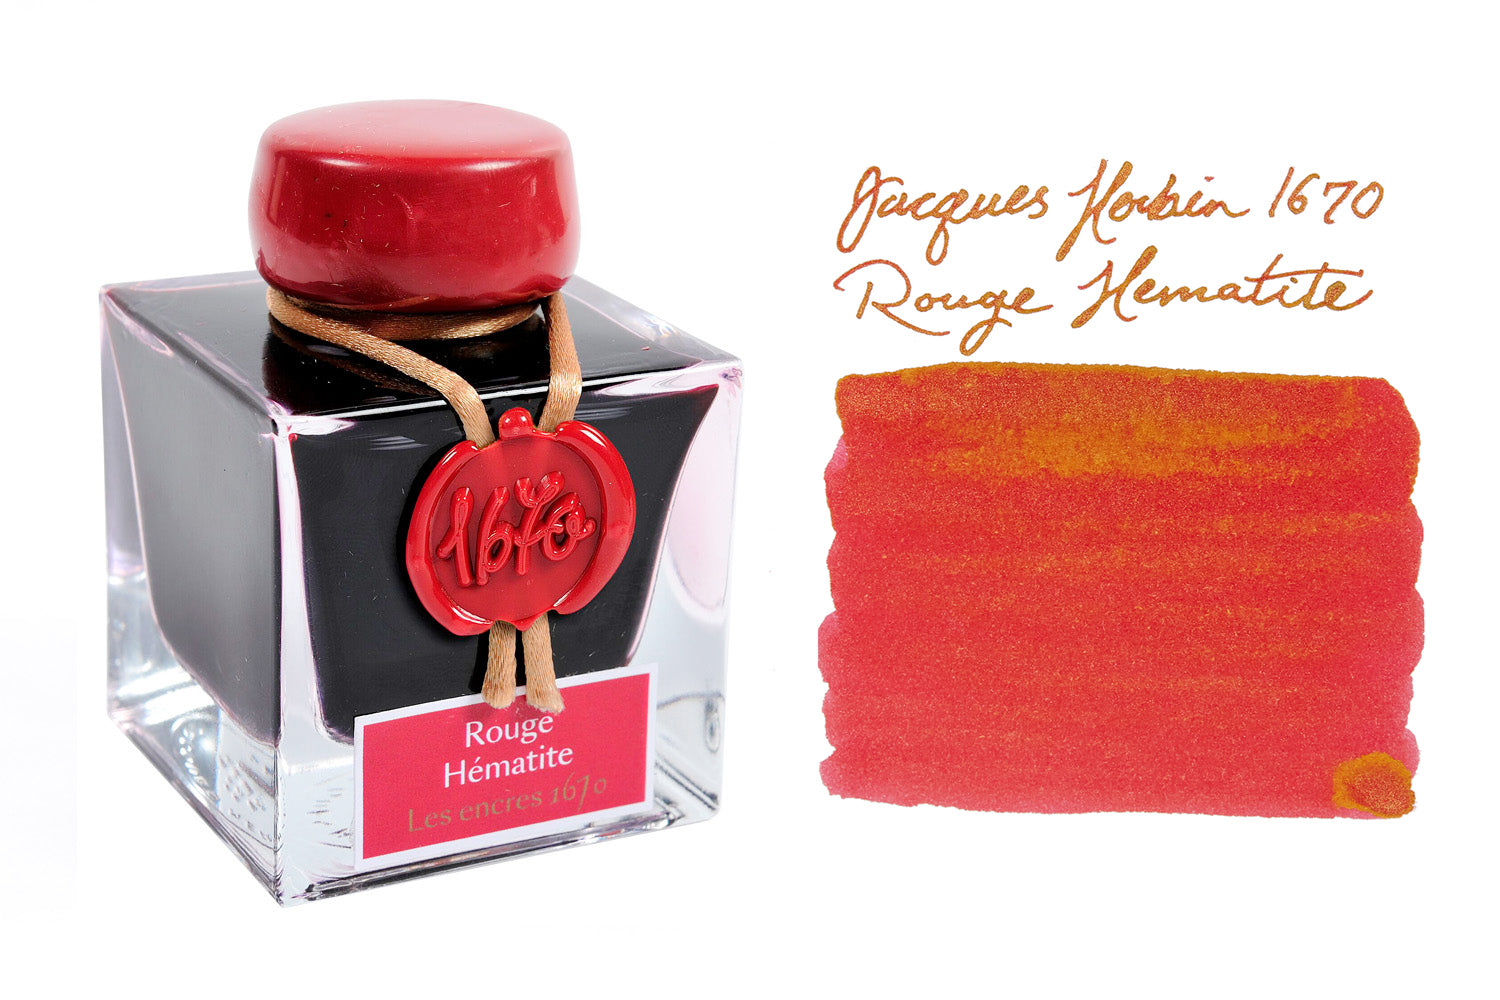 Jacques Herbin 1670 Rouge Hematite - 50ml Bottled Fountain Pen Ink